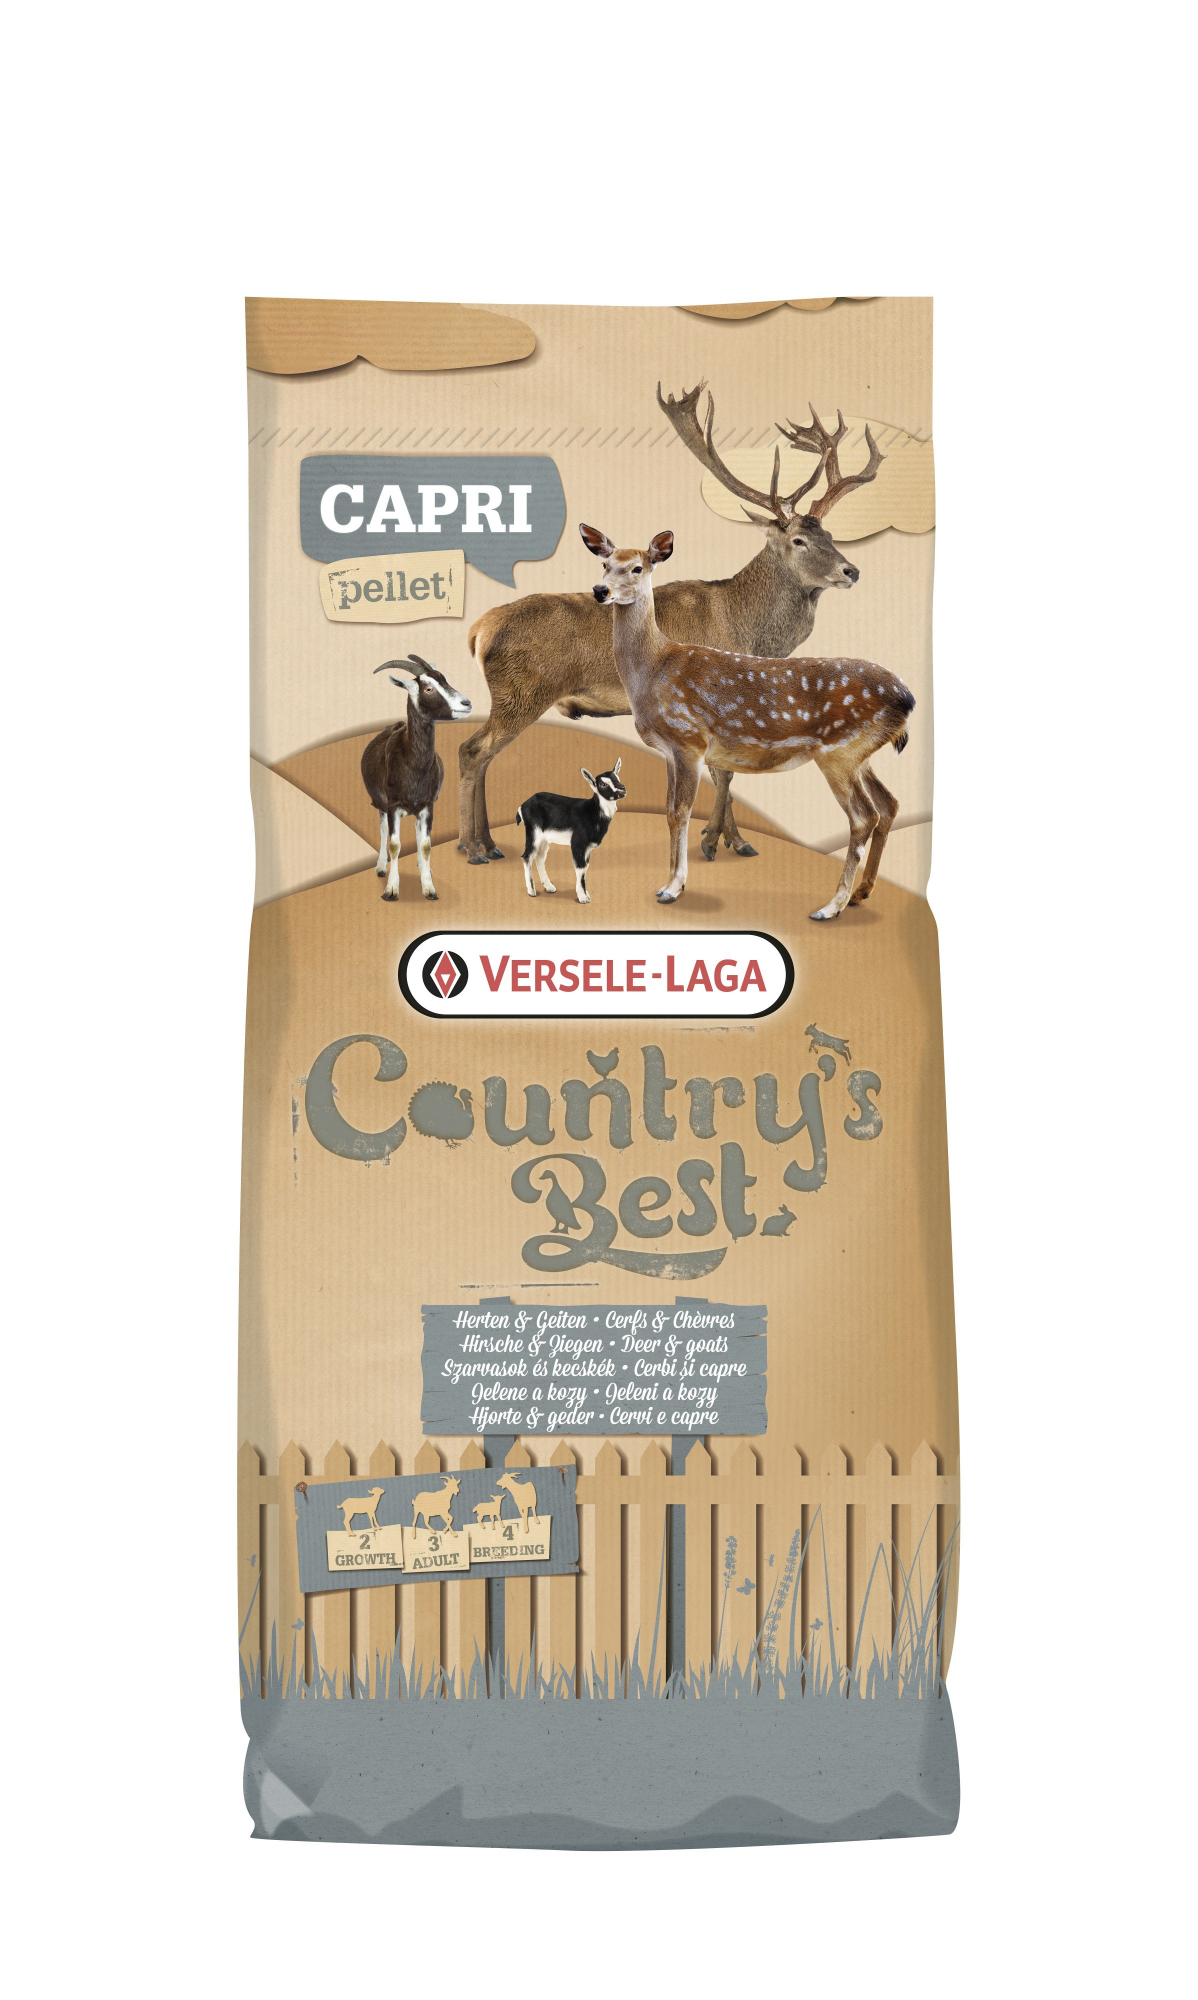 Caprina 3&4 Pellet Country's Best Aliment per cervidi